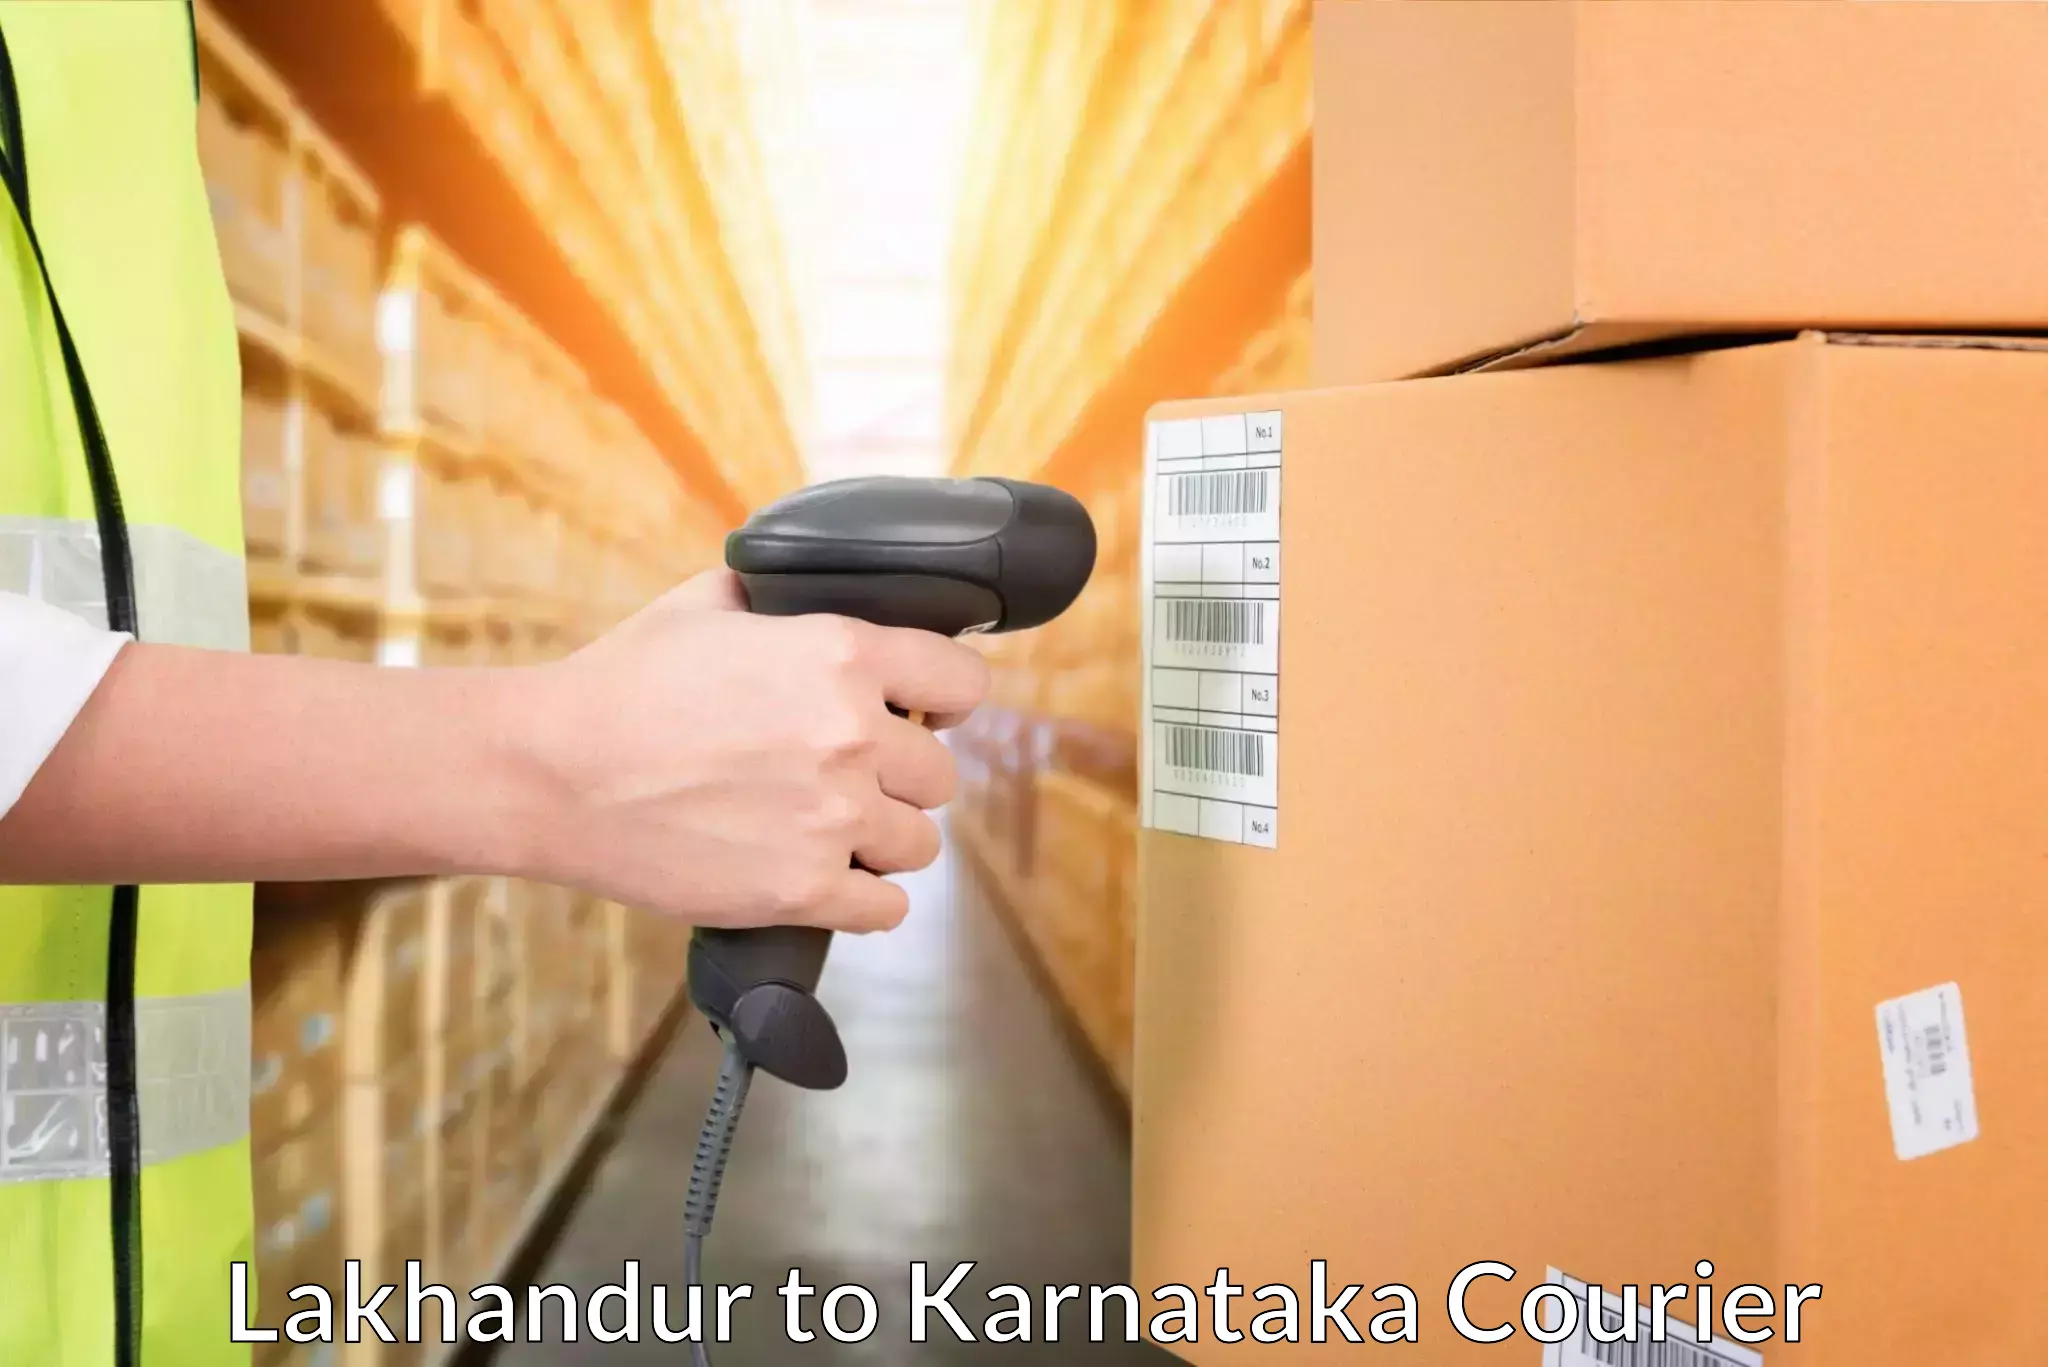 Customer-focused courier Lakhandur to Yellare